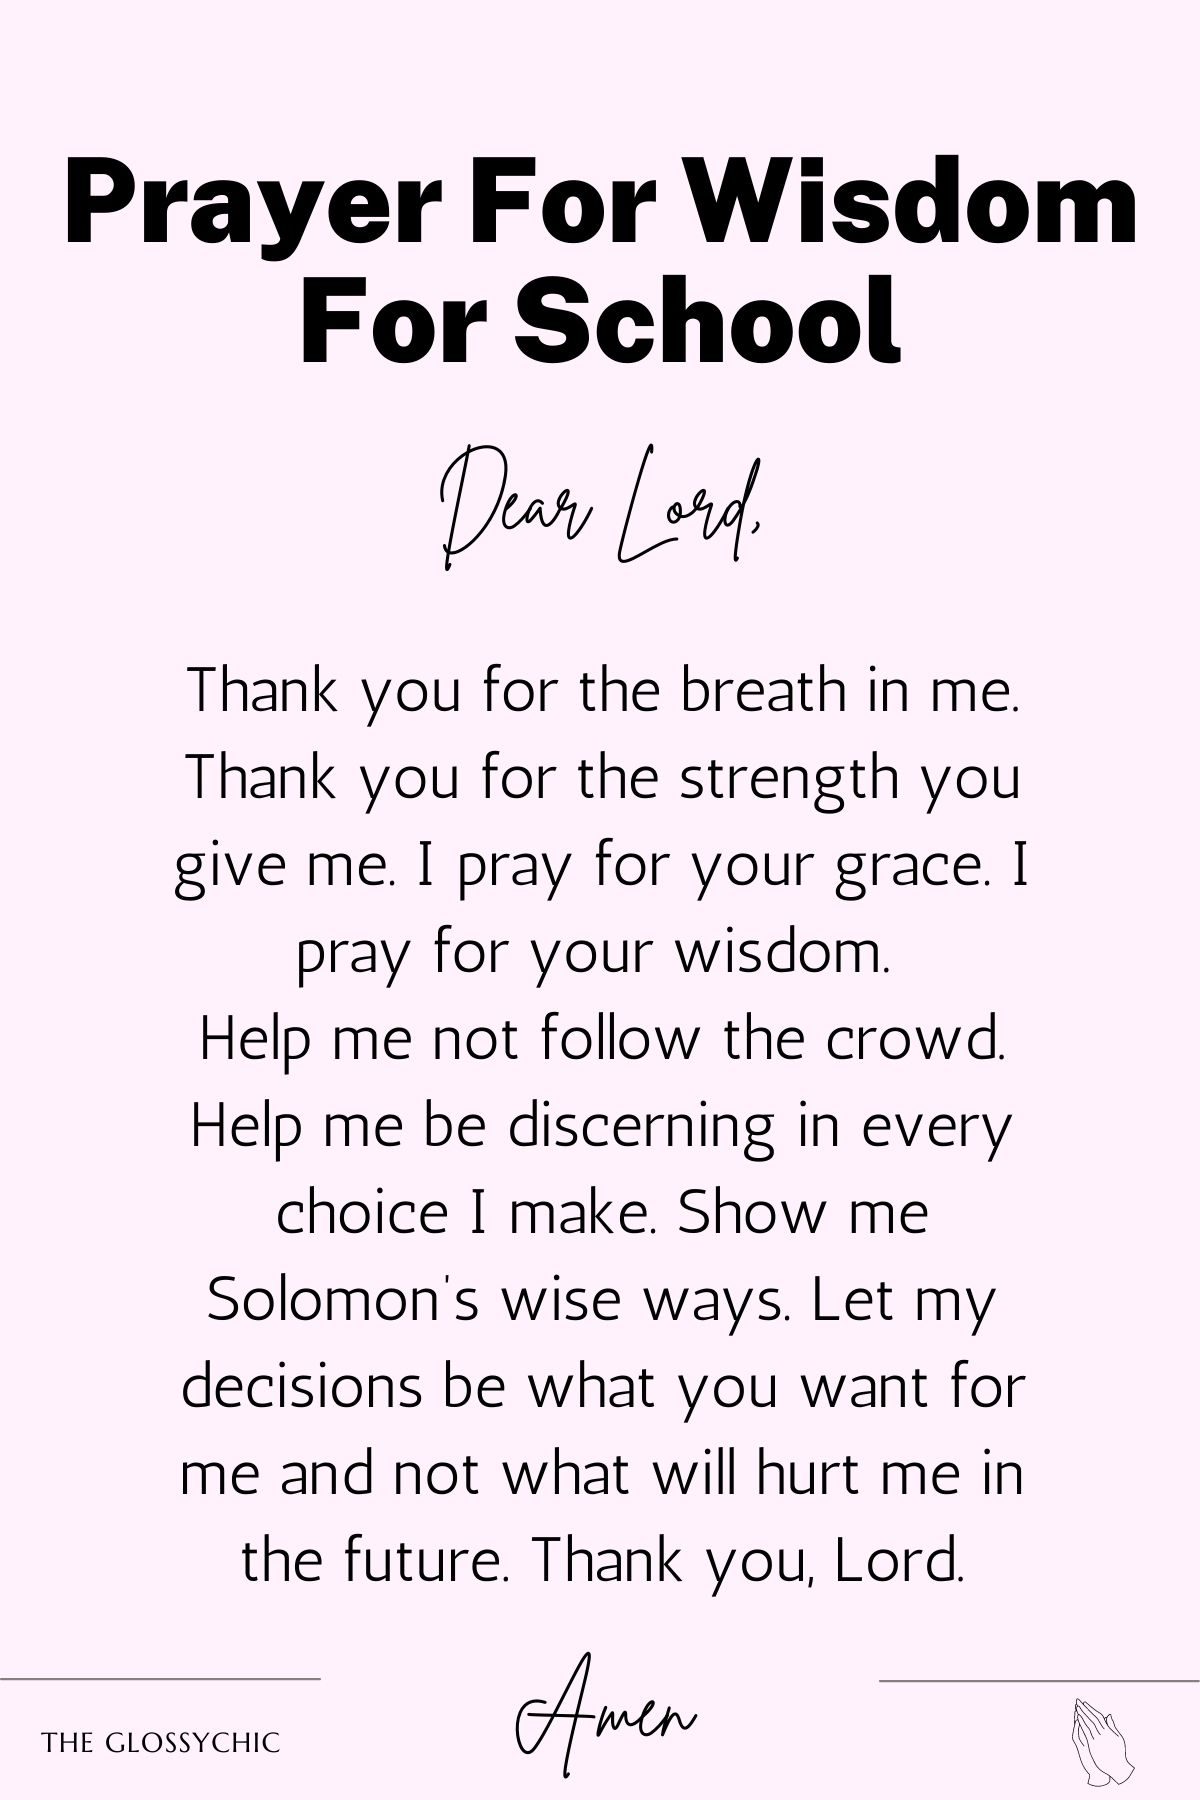 Prayer for wisdom for school